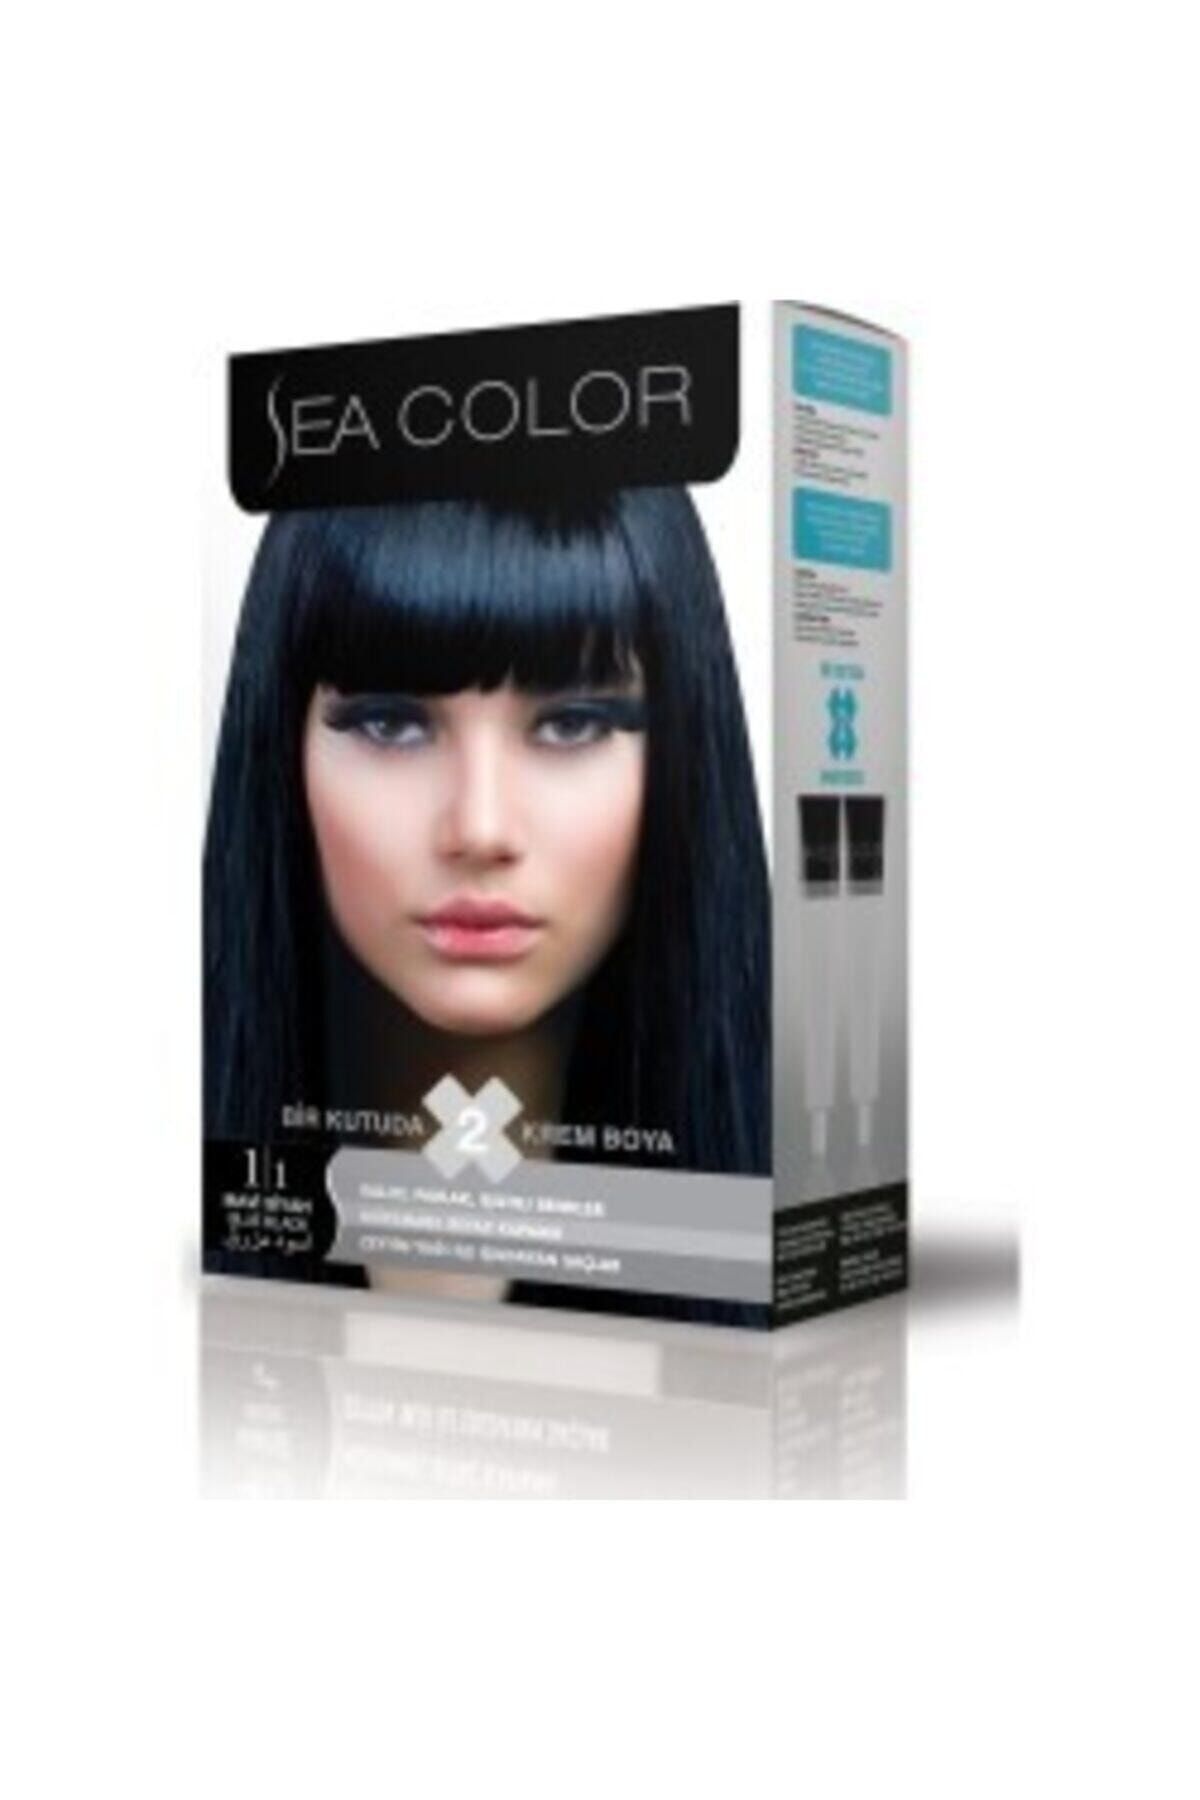 Sea Color Saç Boyası 2 Li 1.1 Mavi Siyah